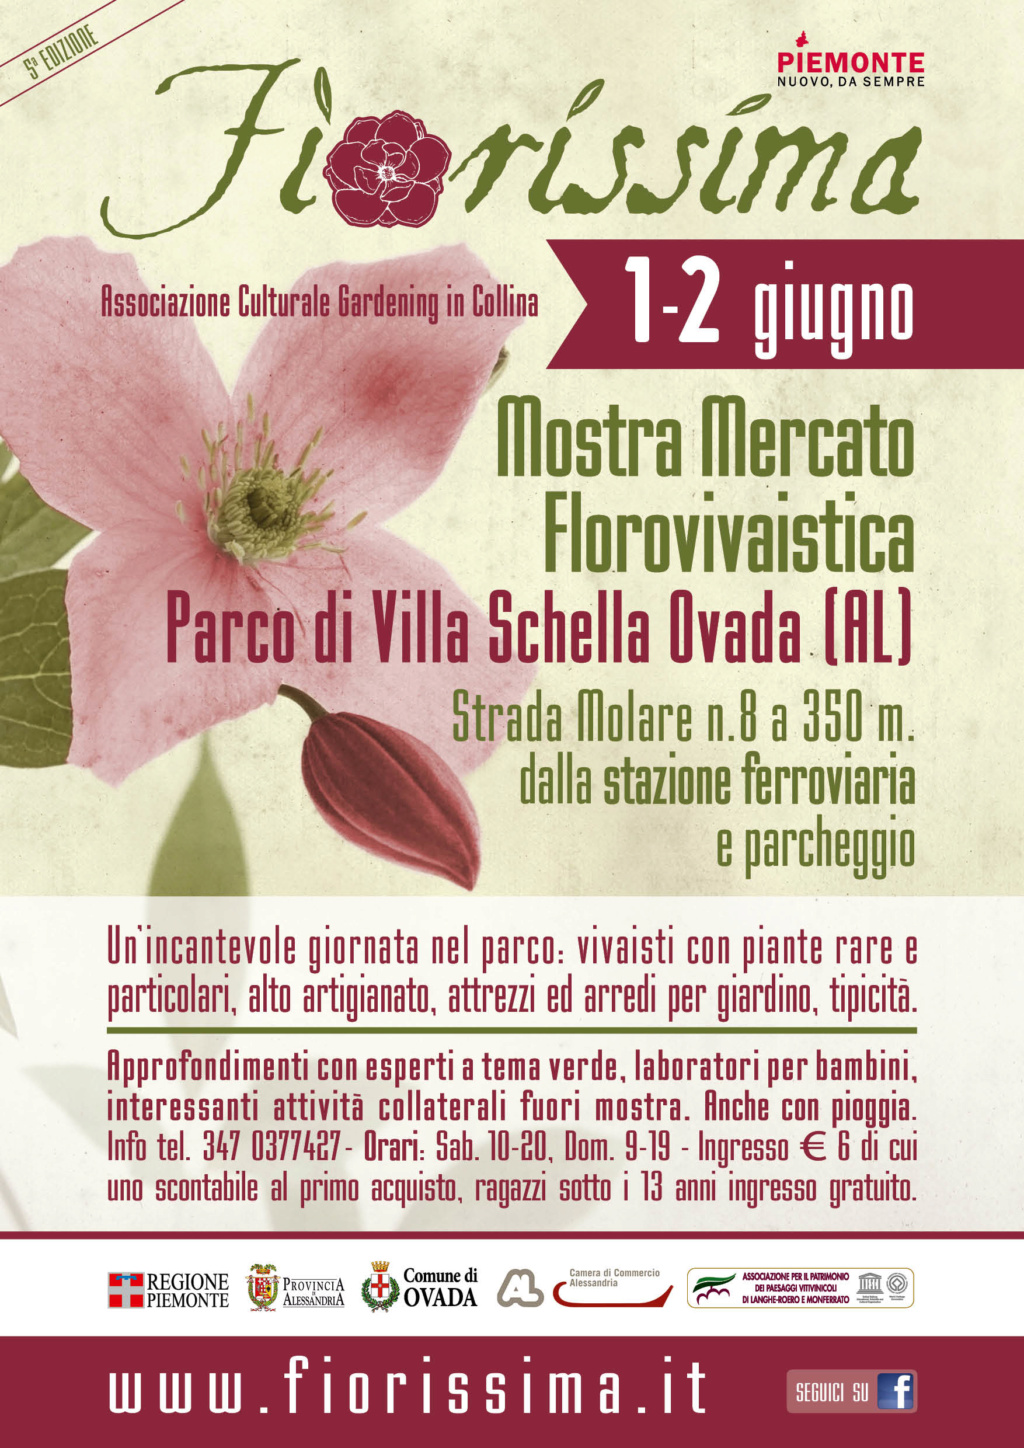 Fiorissima - mostra mercato florovivaistica  Garden10